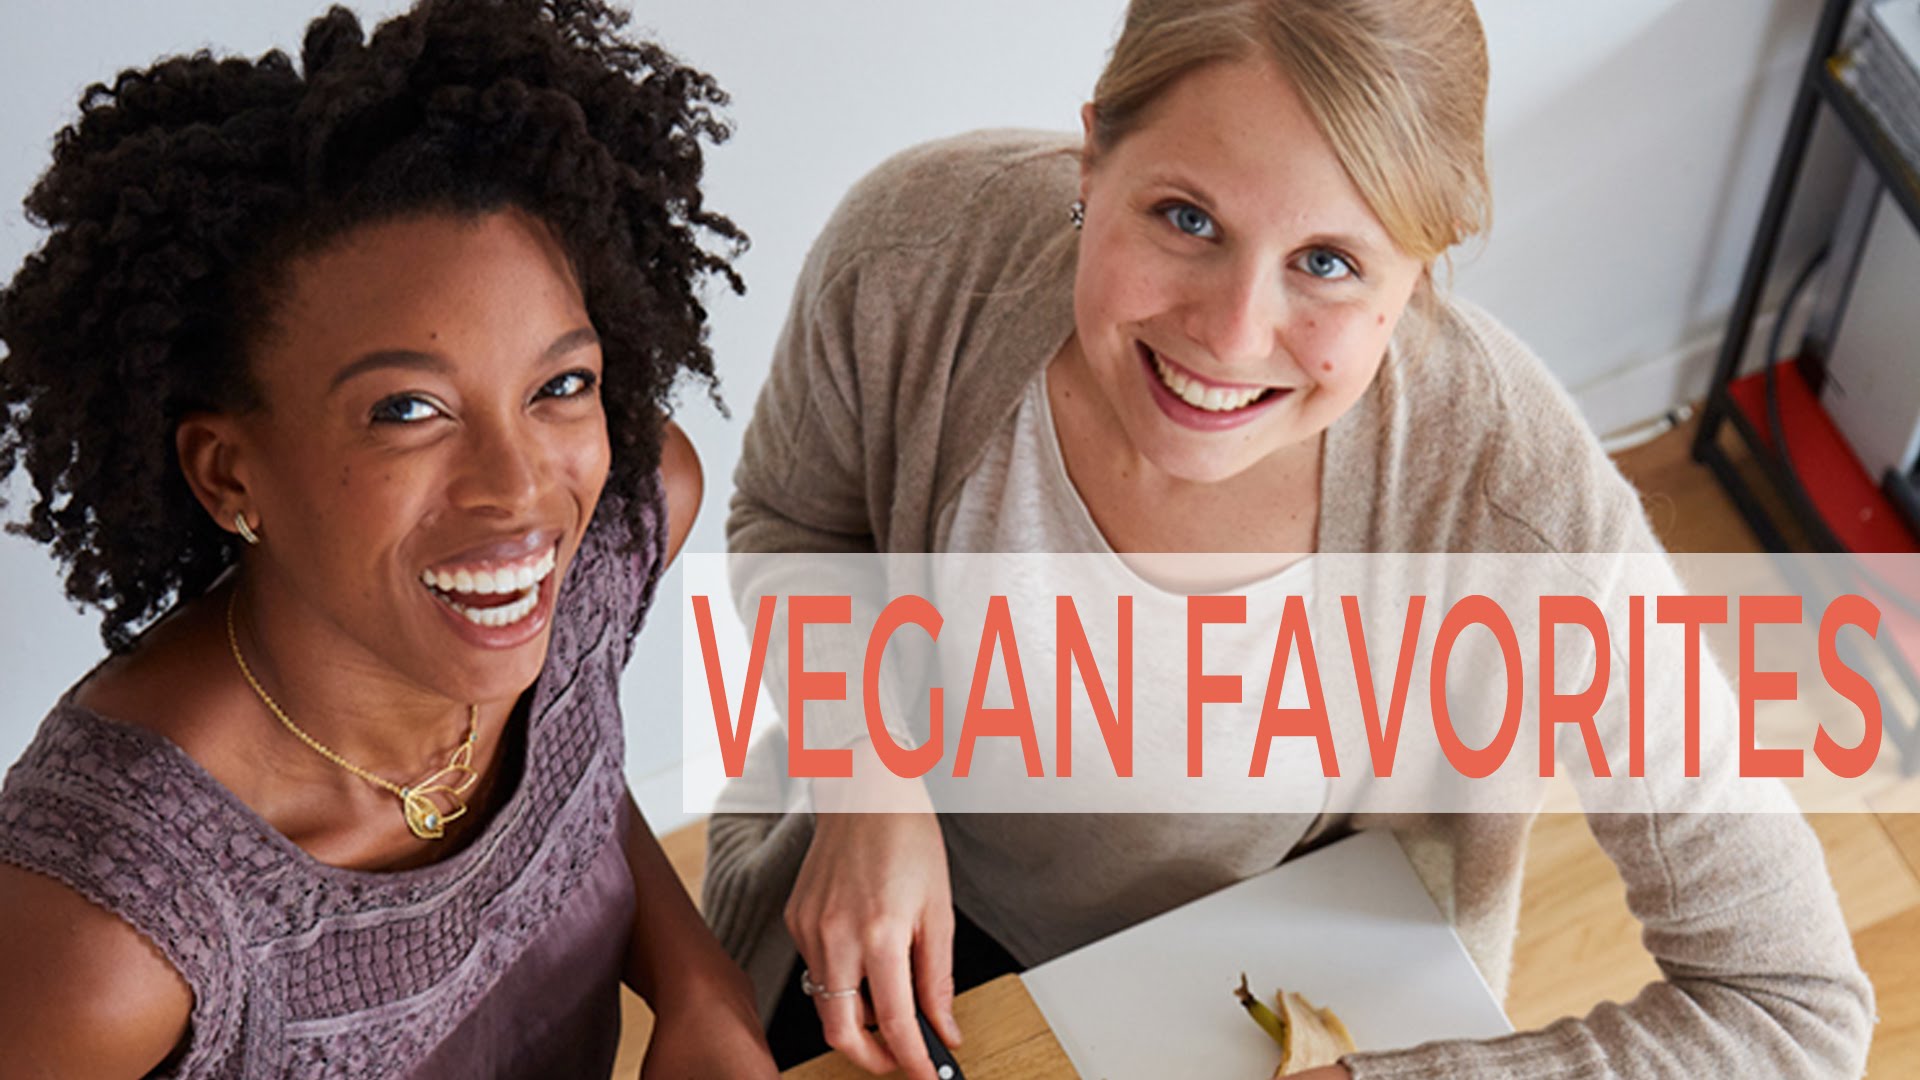 My Favorite Vegan Foods with Isabelle - Vegan Punch1920 x 1080